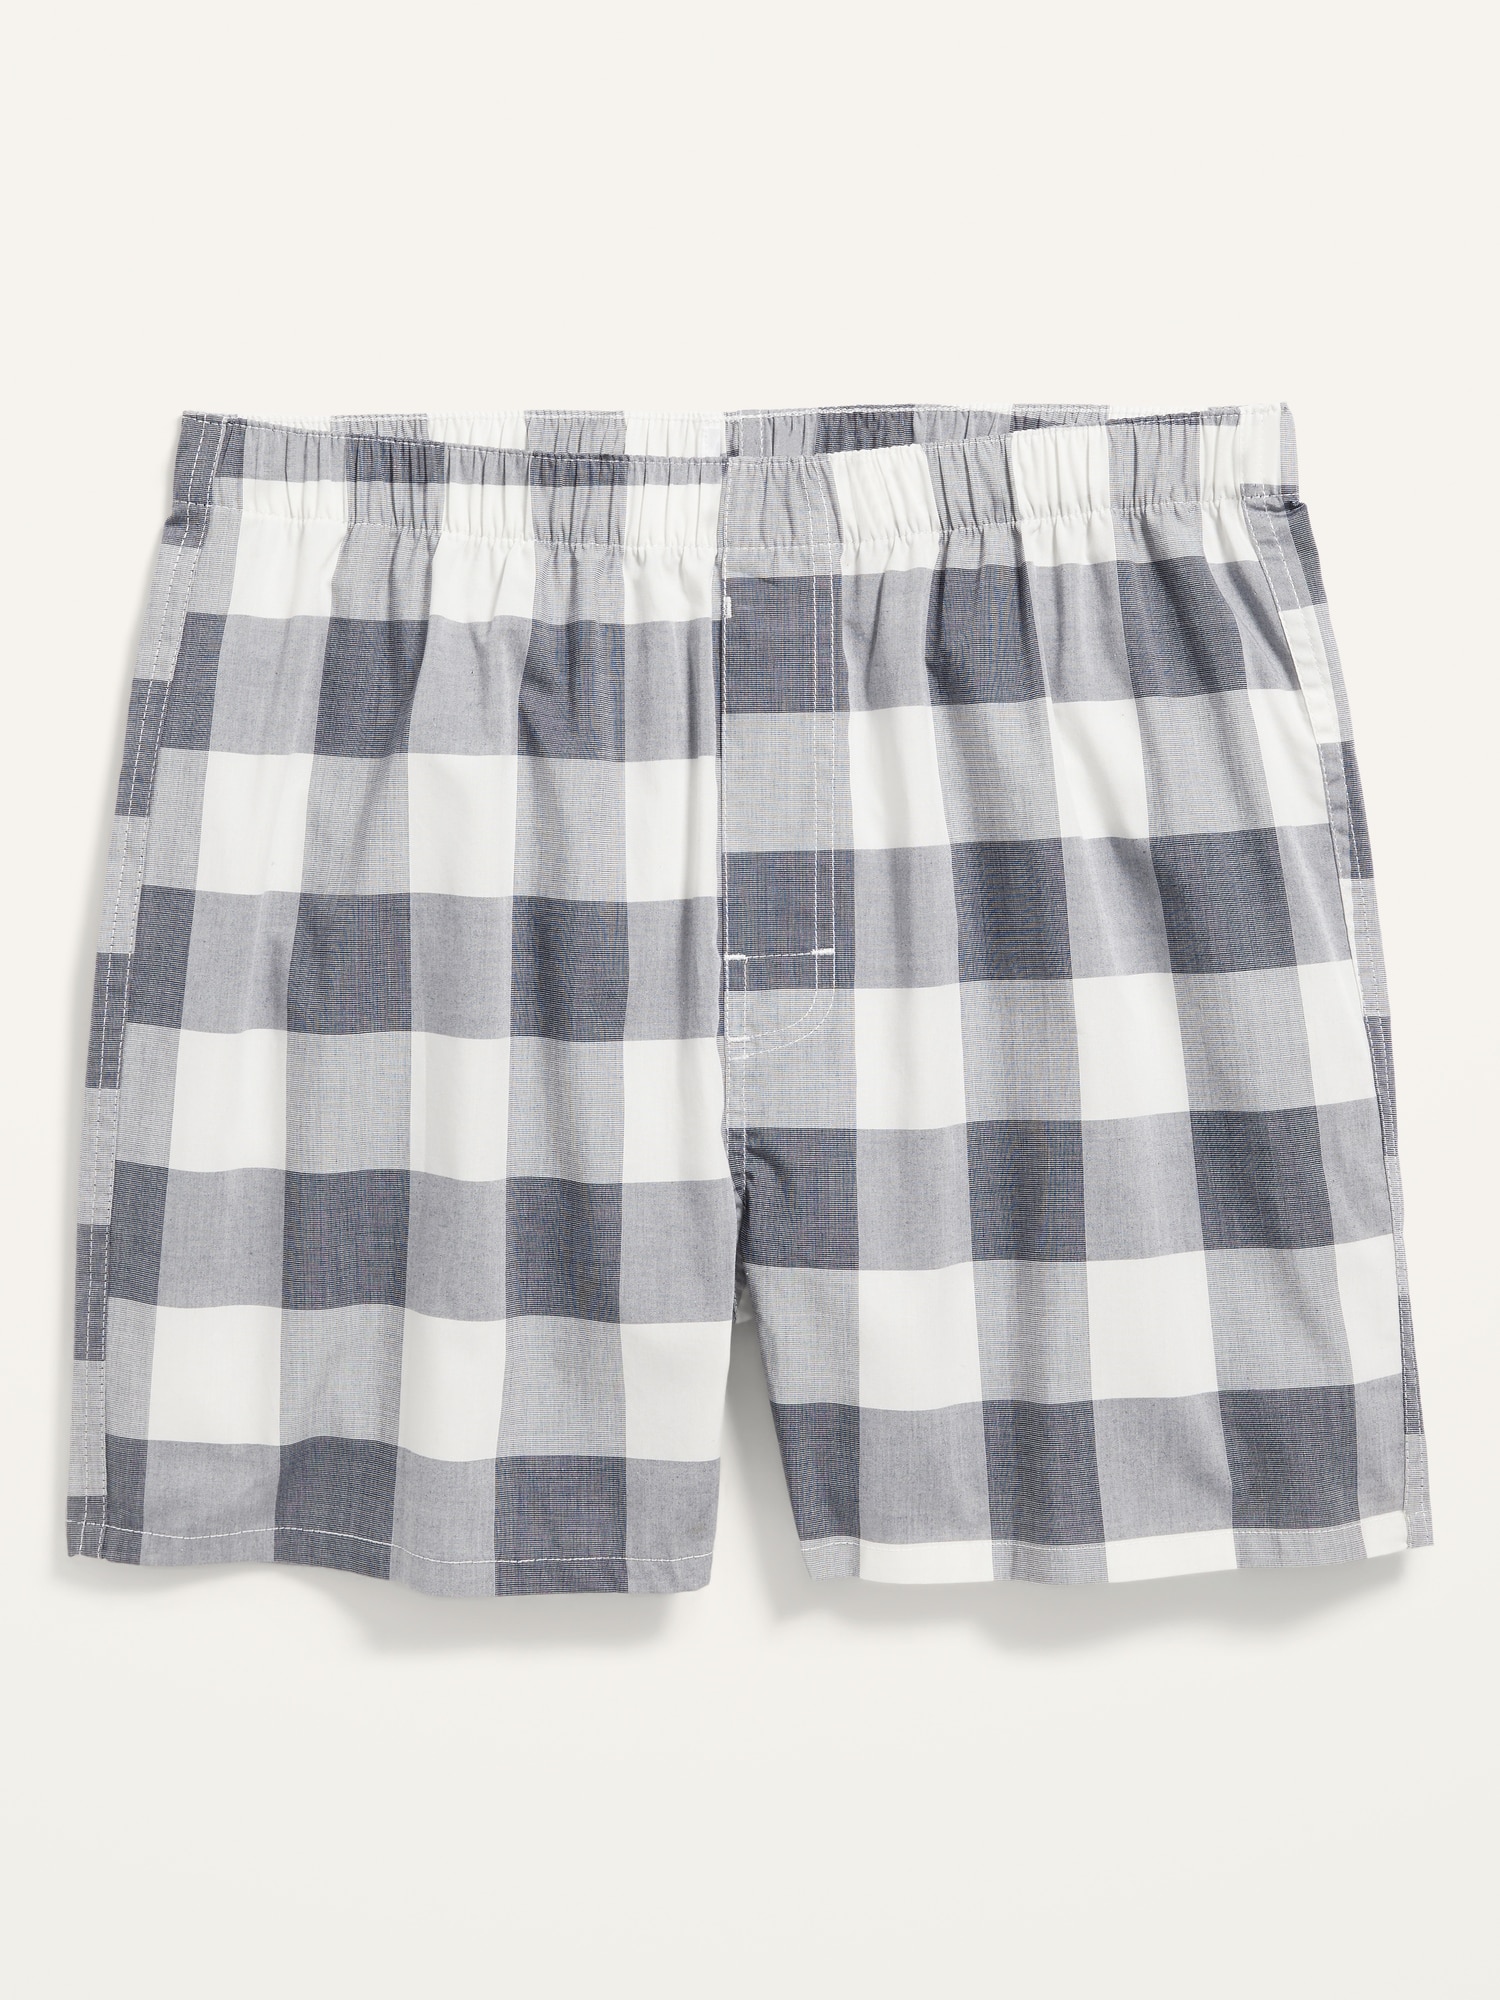 Soft-Washed Printed Boxer Shorts for Men 